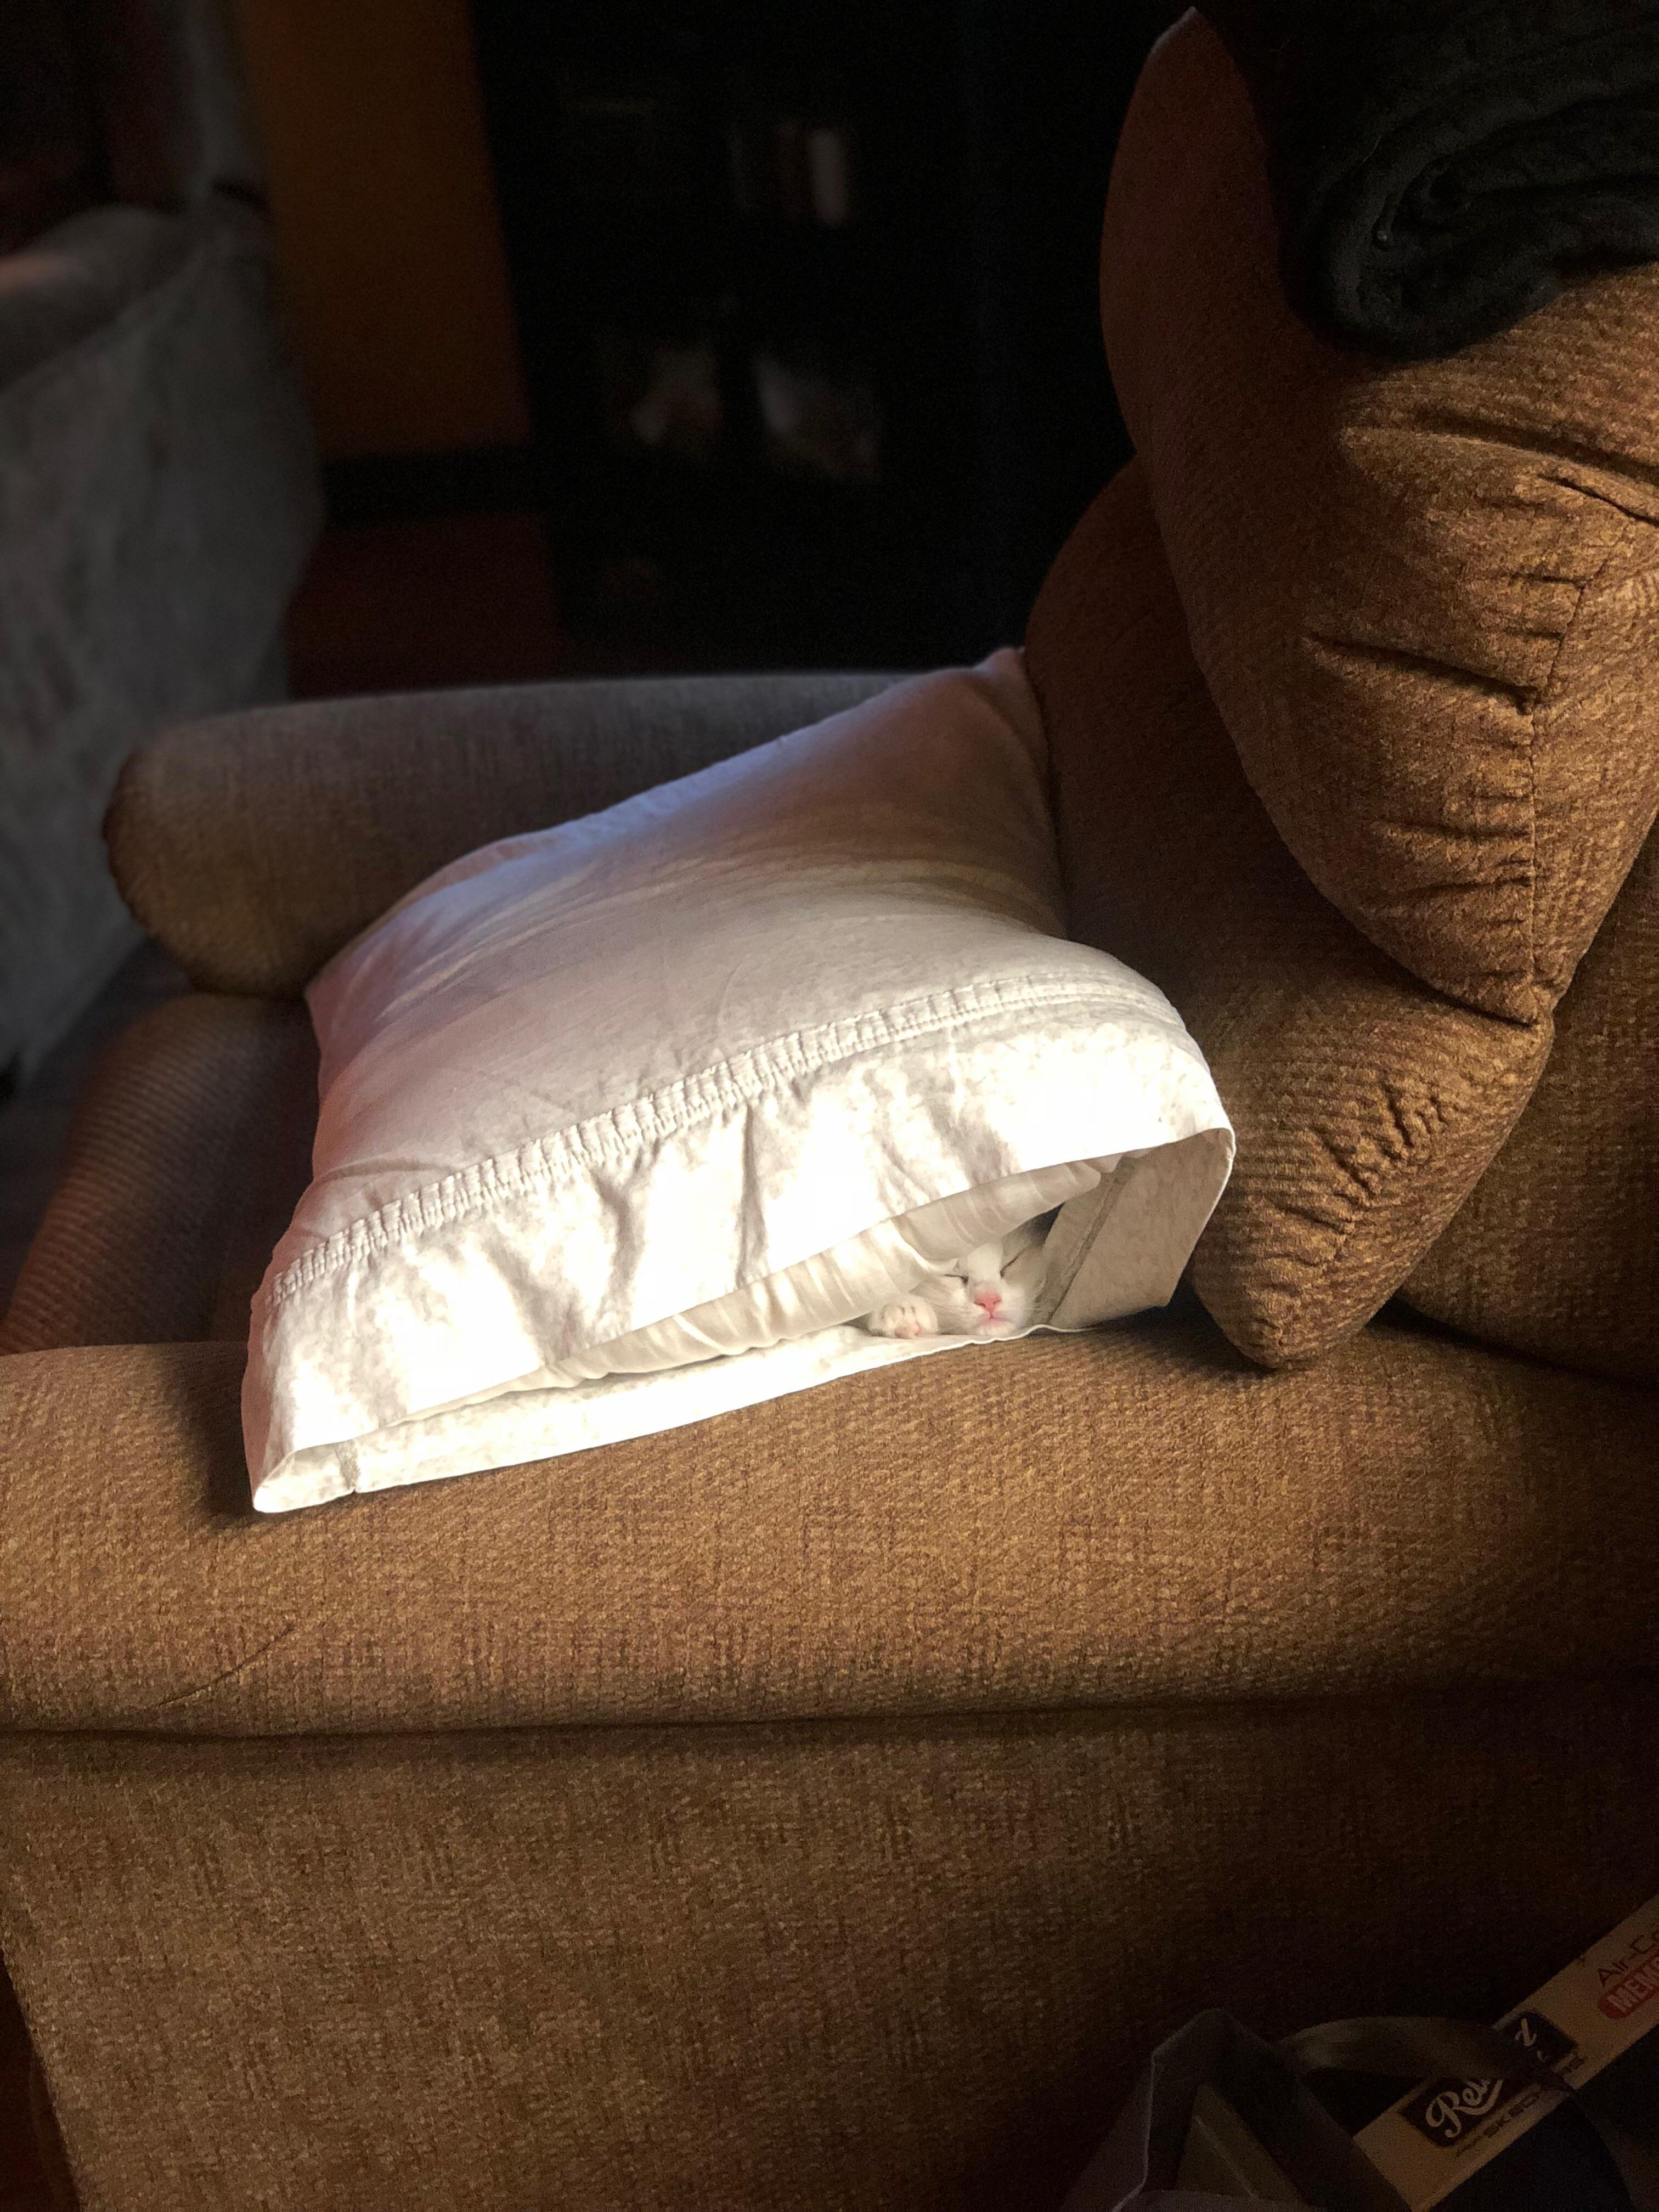 My pillow has a surprise inside